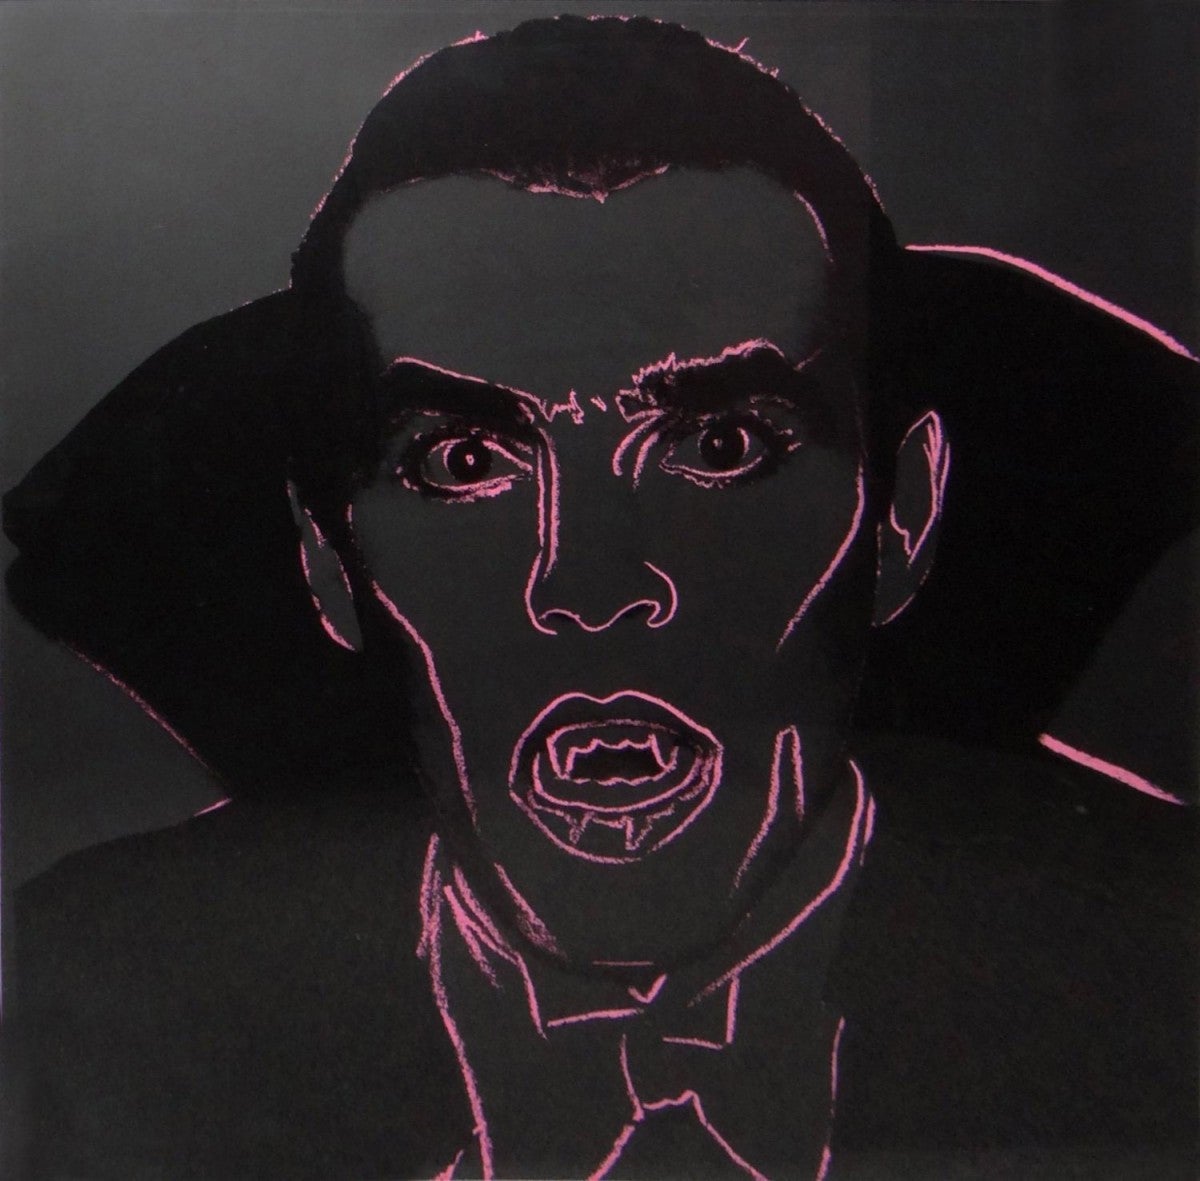 Andy Warhol Portrait Print - Dracula (FS II.264)